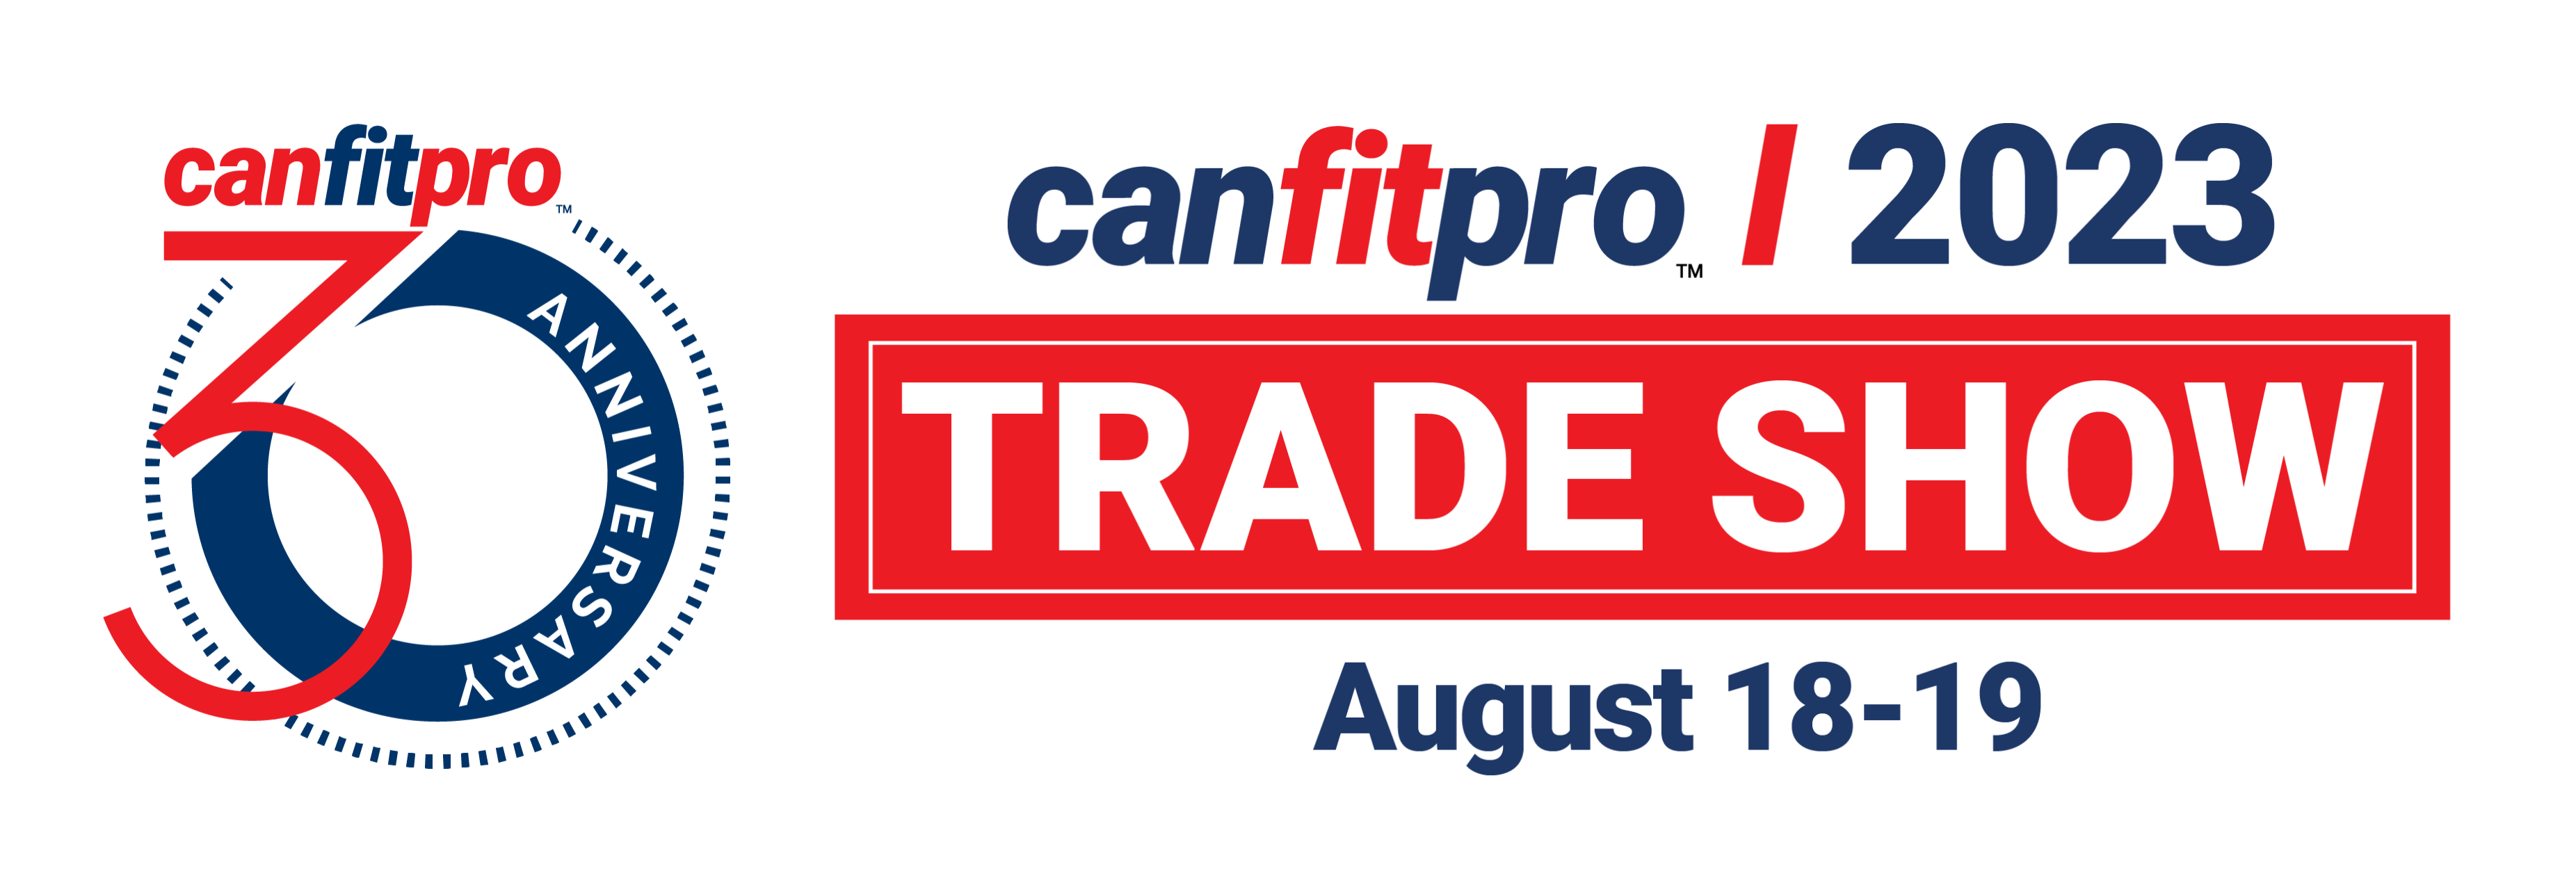 canfitpro 2023 Trade Show logo